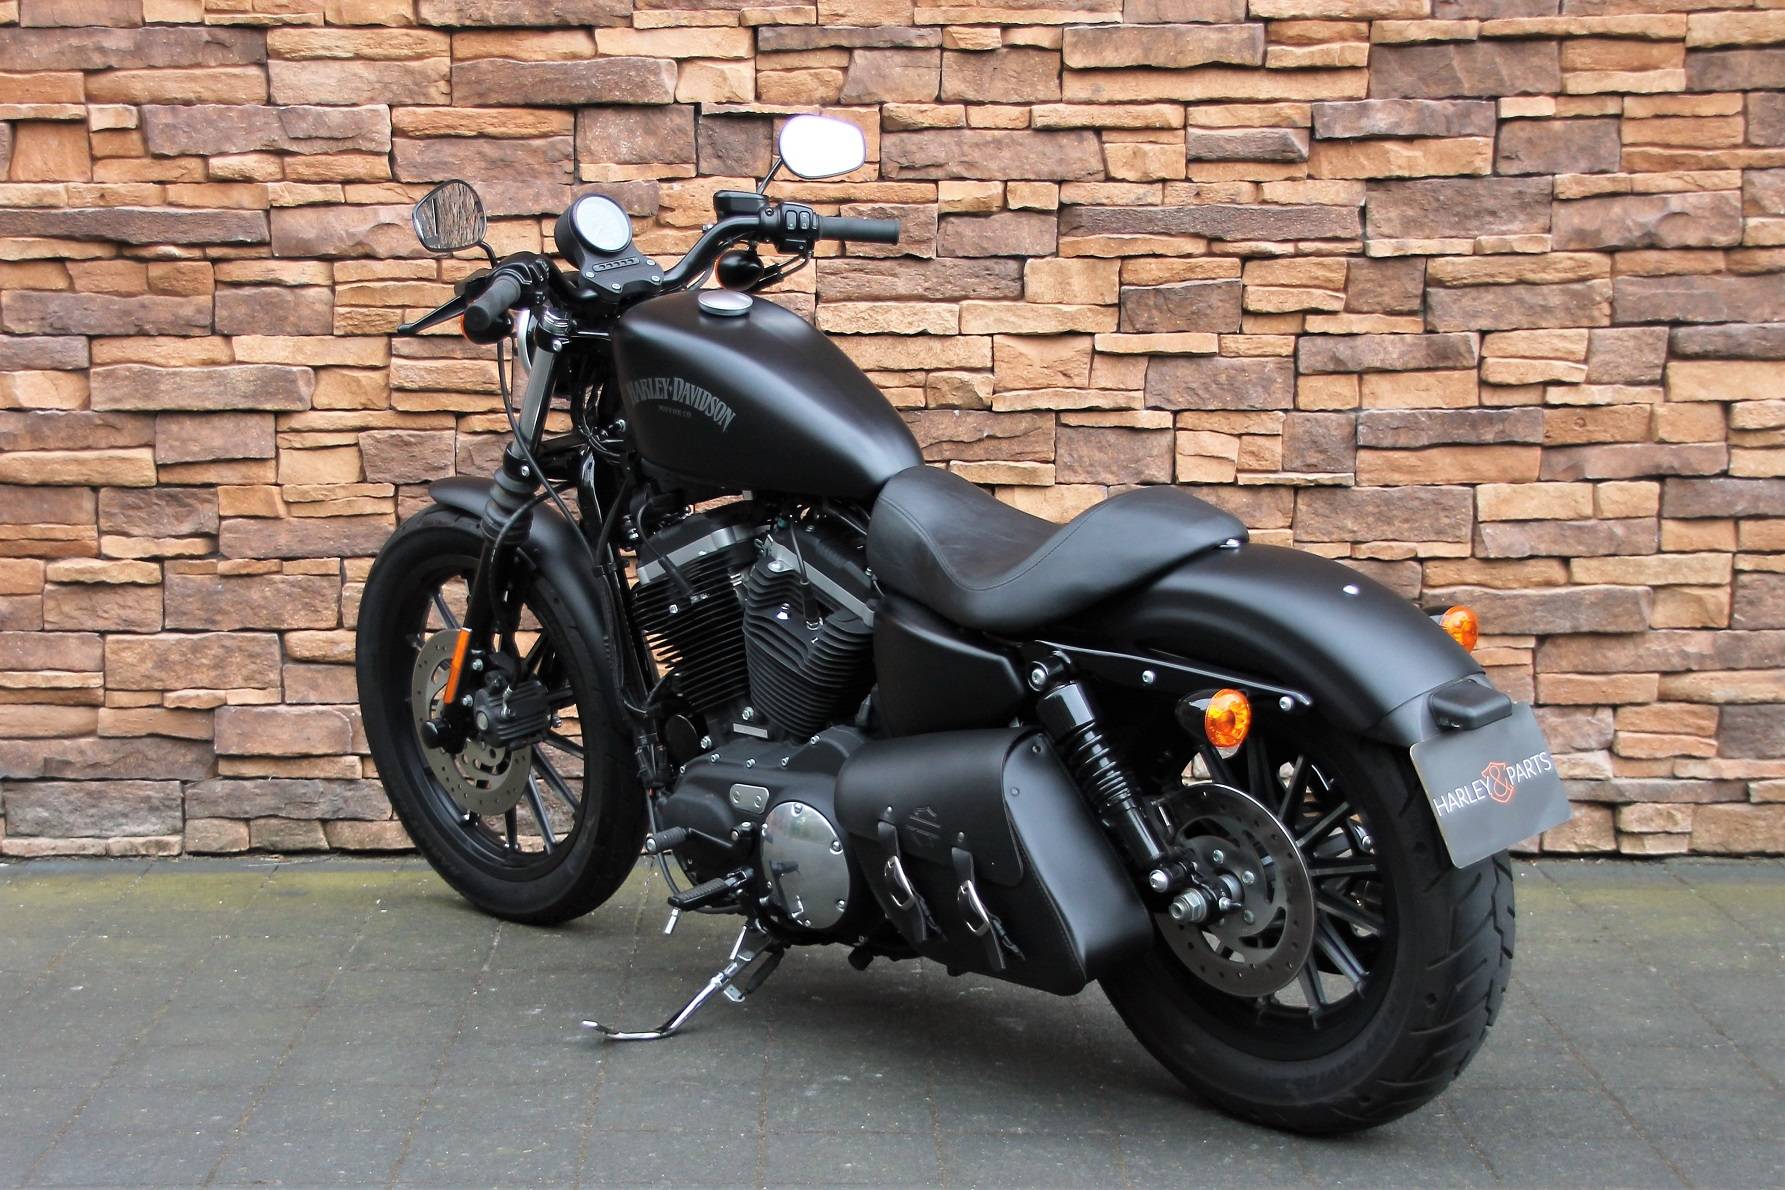 Harley-davidson xl883n iron (2009-) review